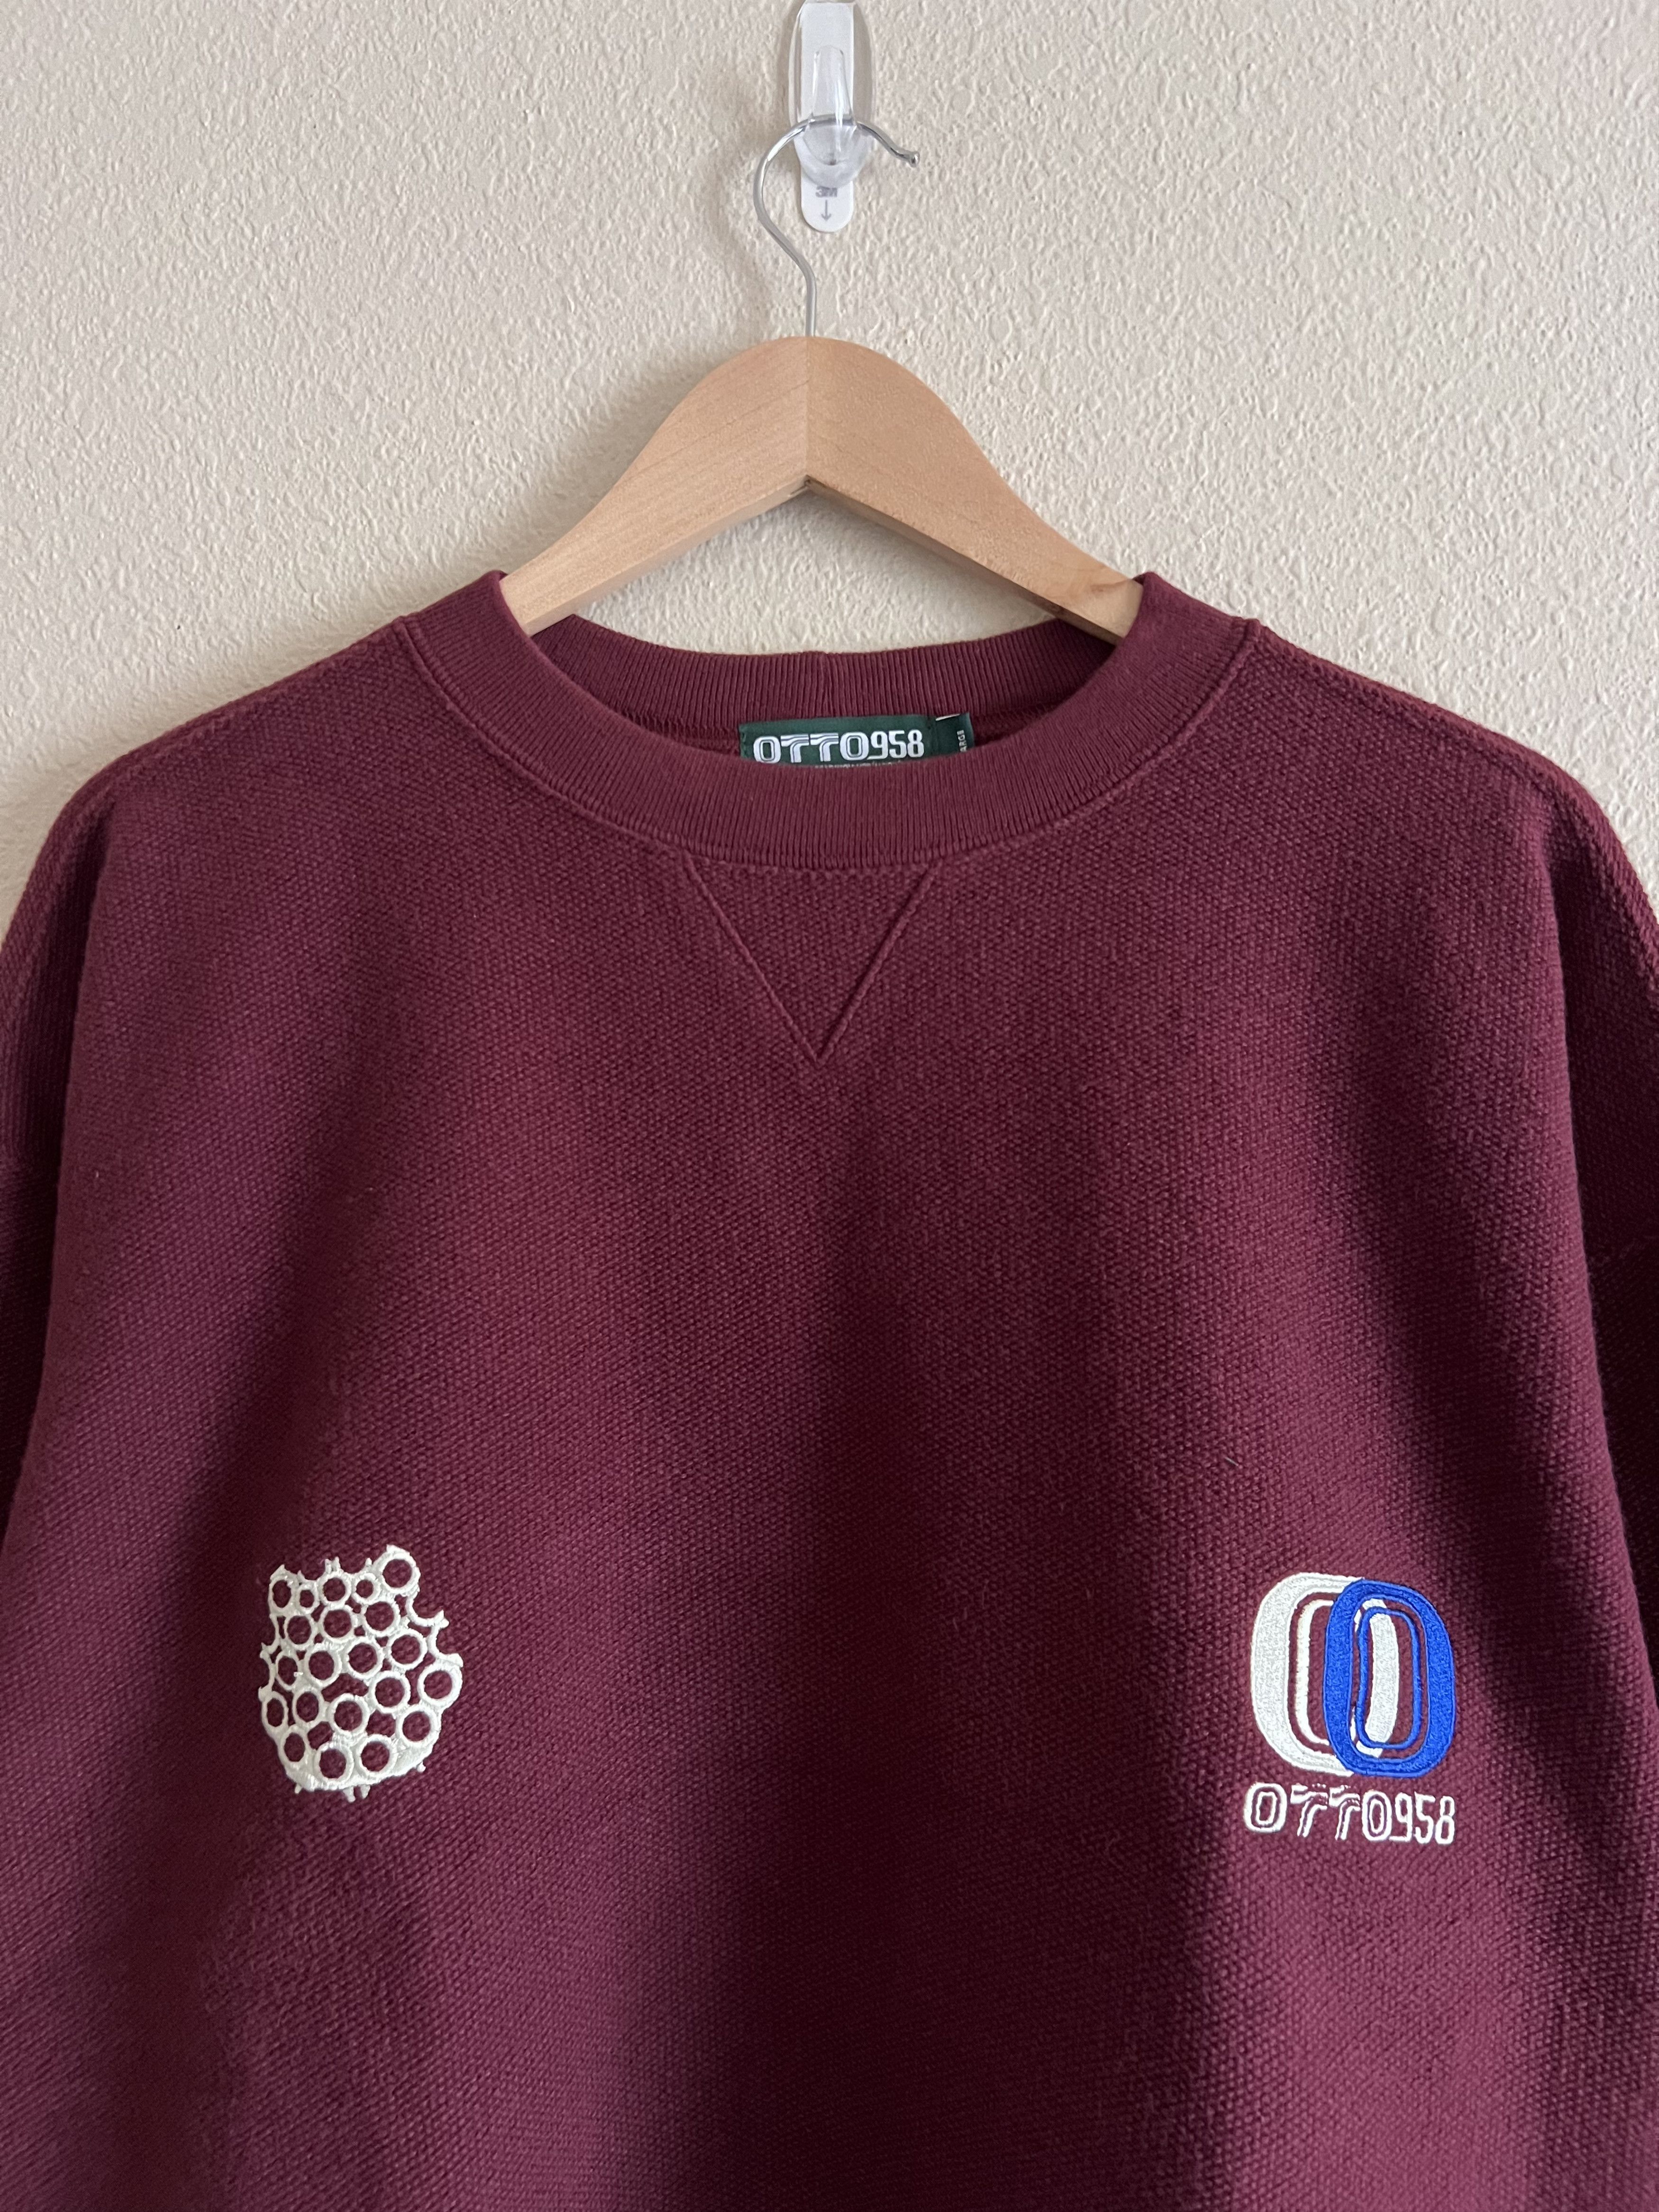 OTTO 958 OTTO 958 Double Metal Crewneck Sweatshirt in Burgundy | Grailed